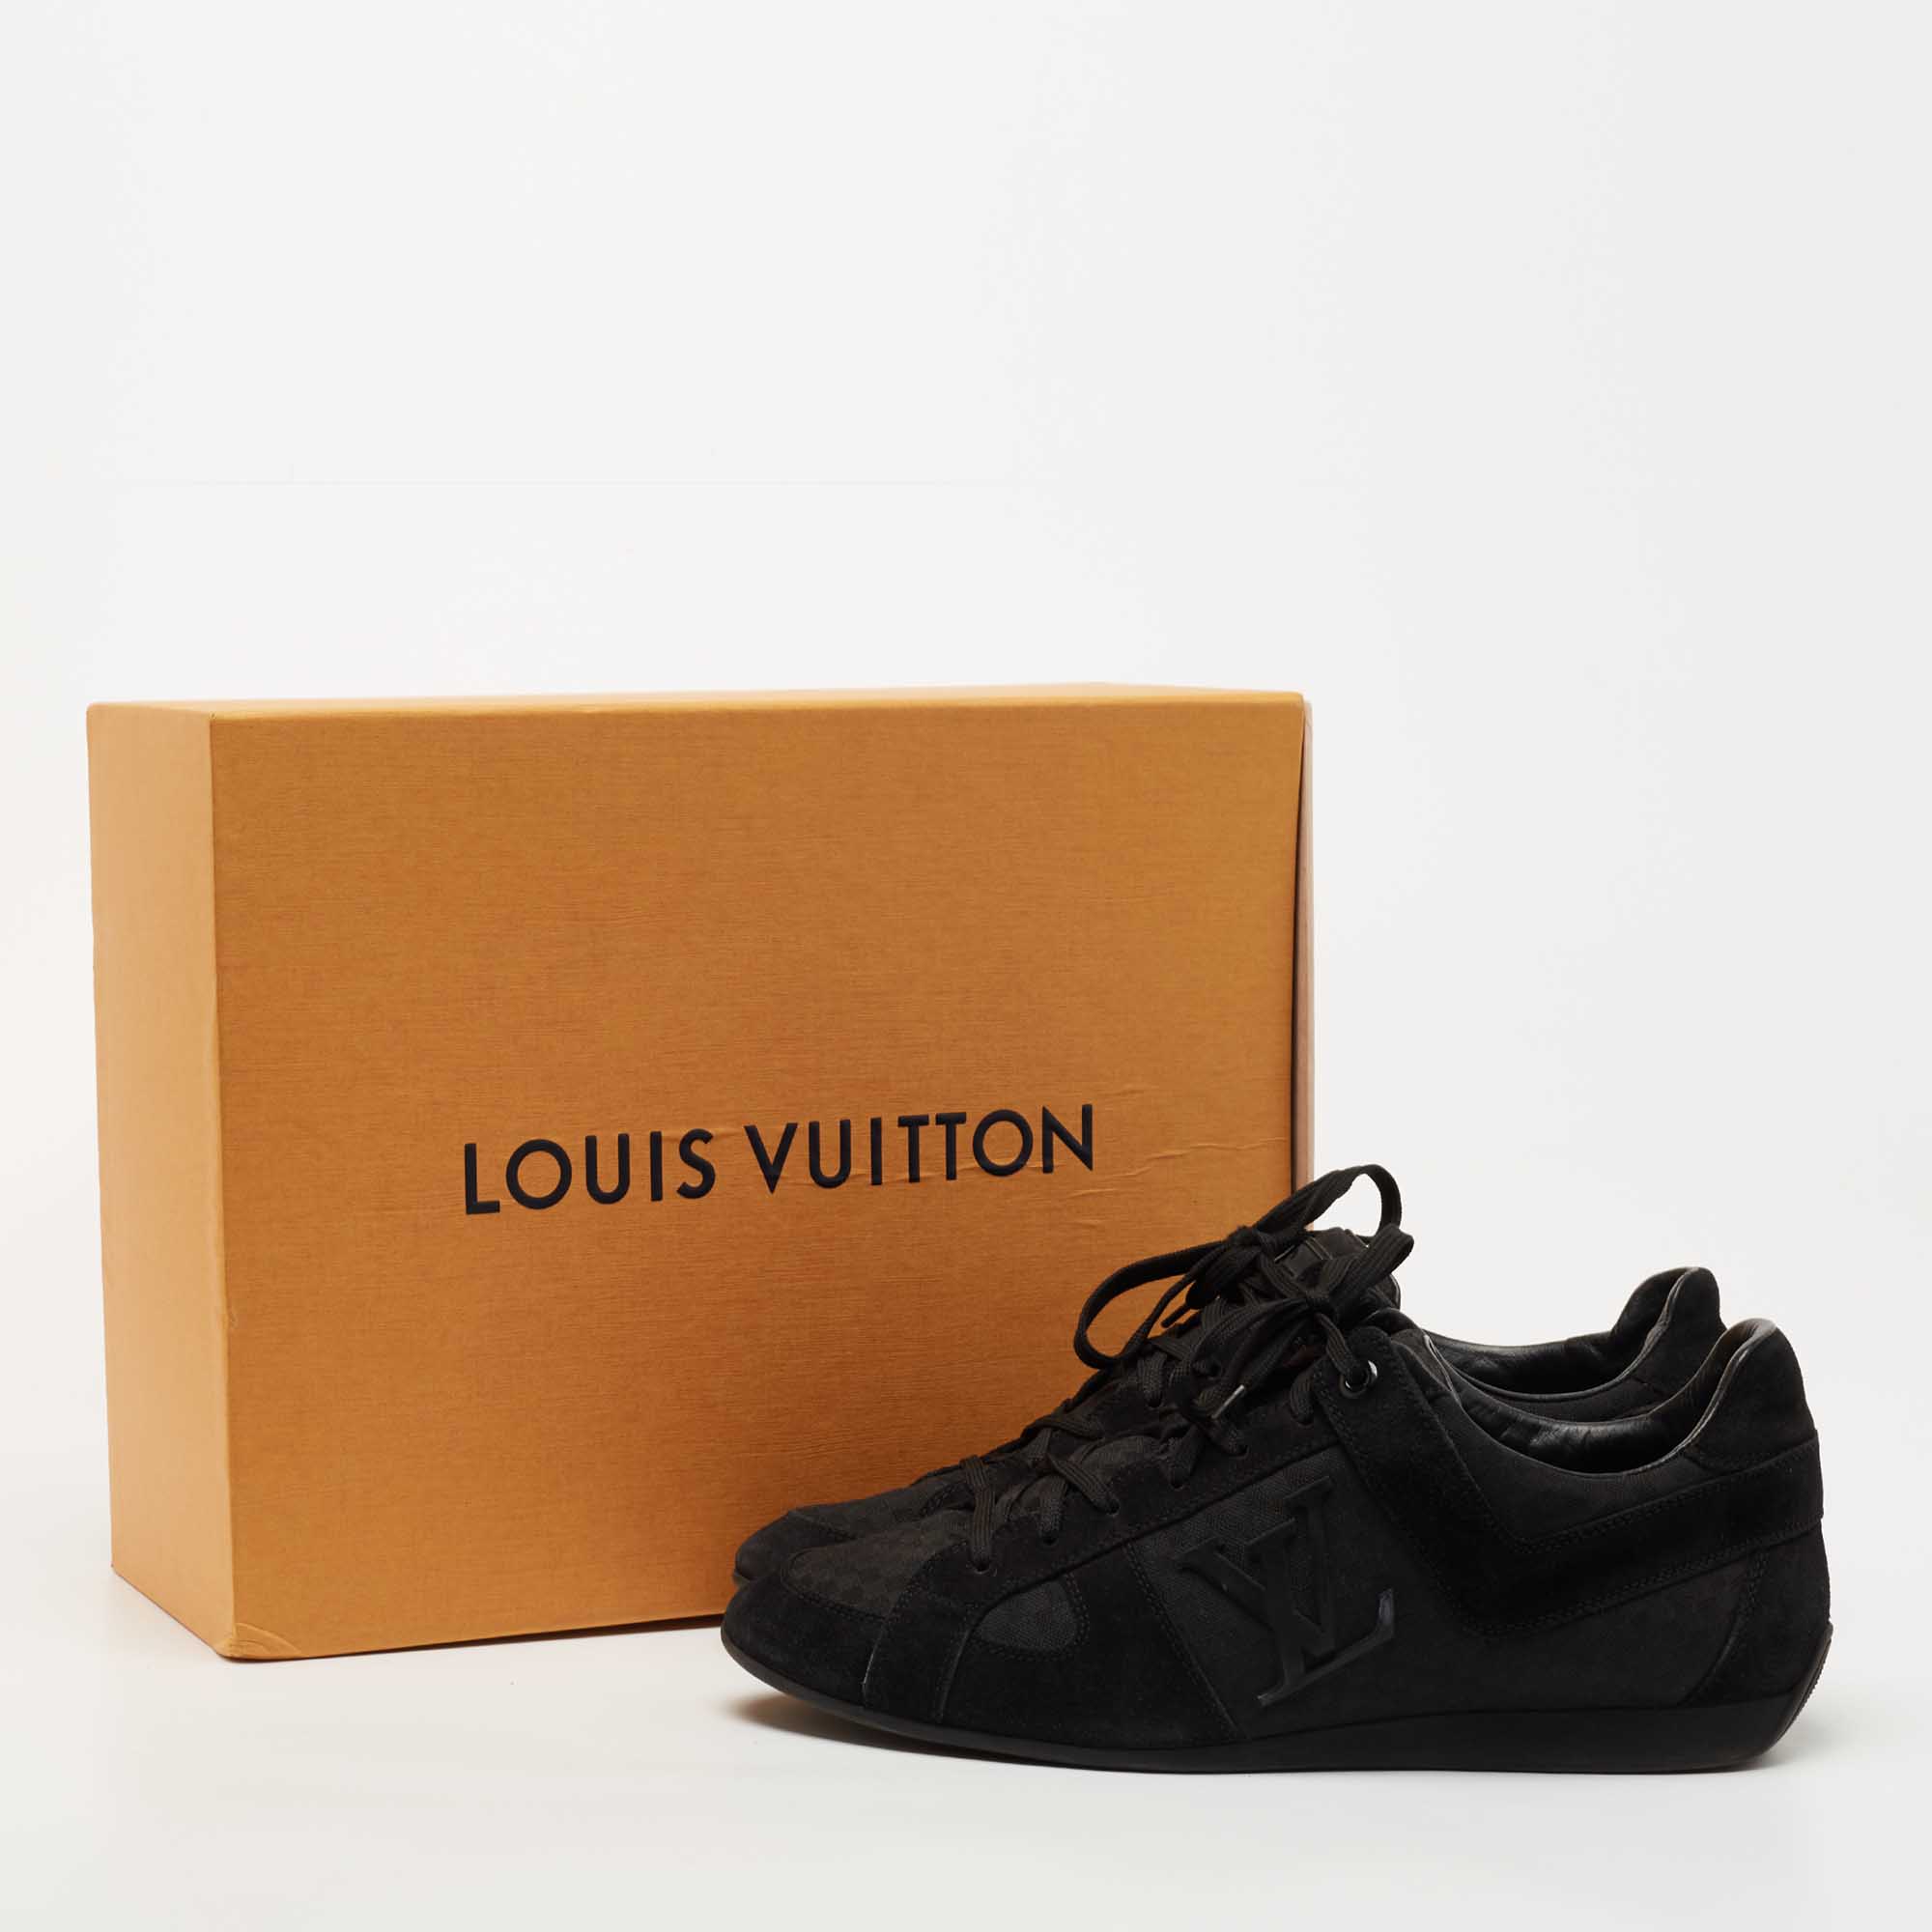 Louis Vuitton Black Suede and Canvas Low Top Sneakers Size 43 Louis Vuitton